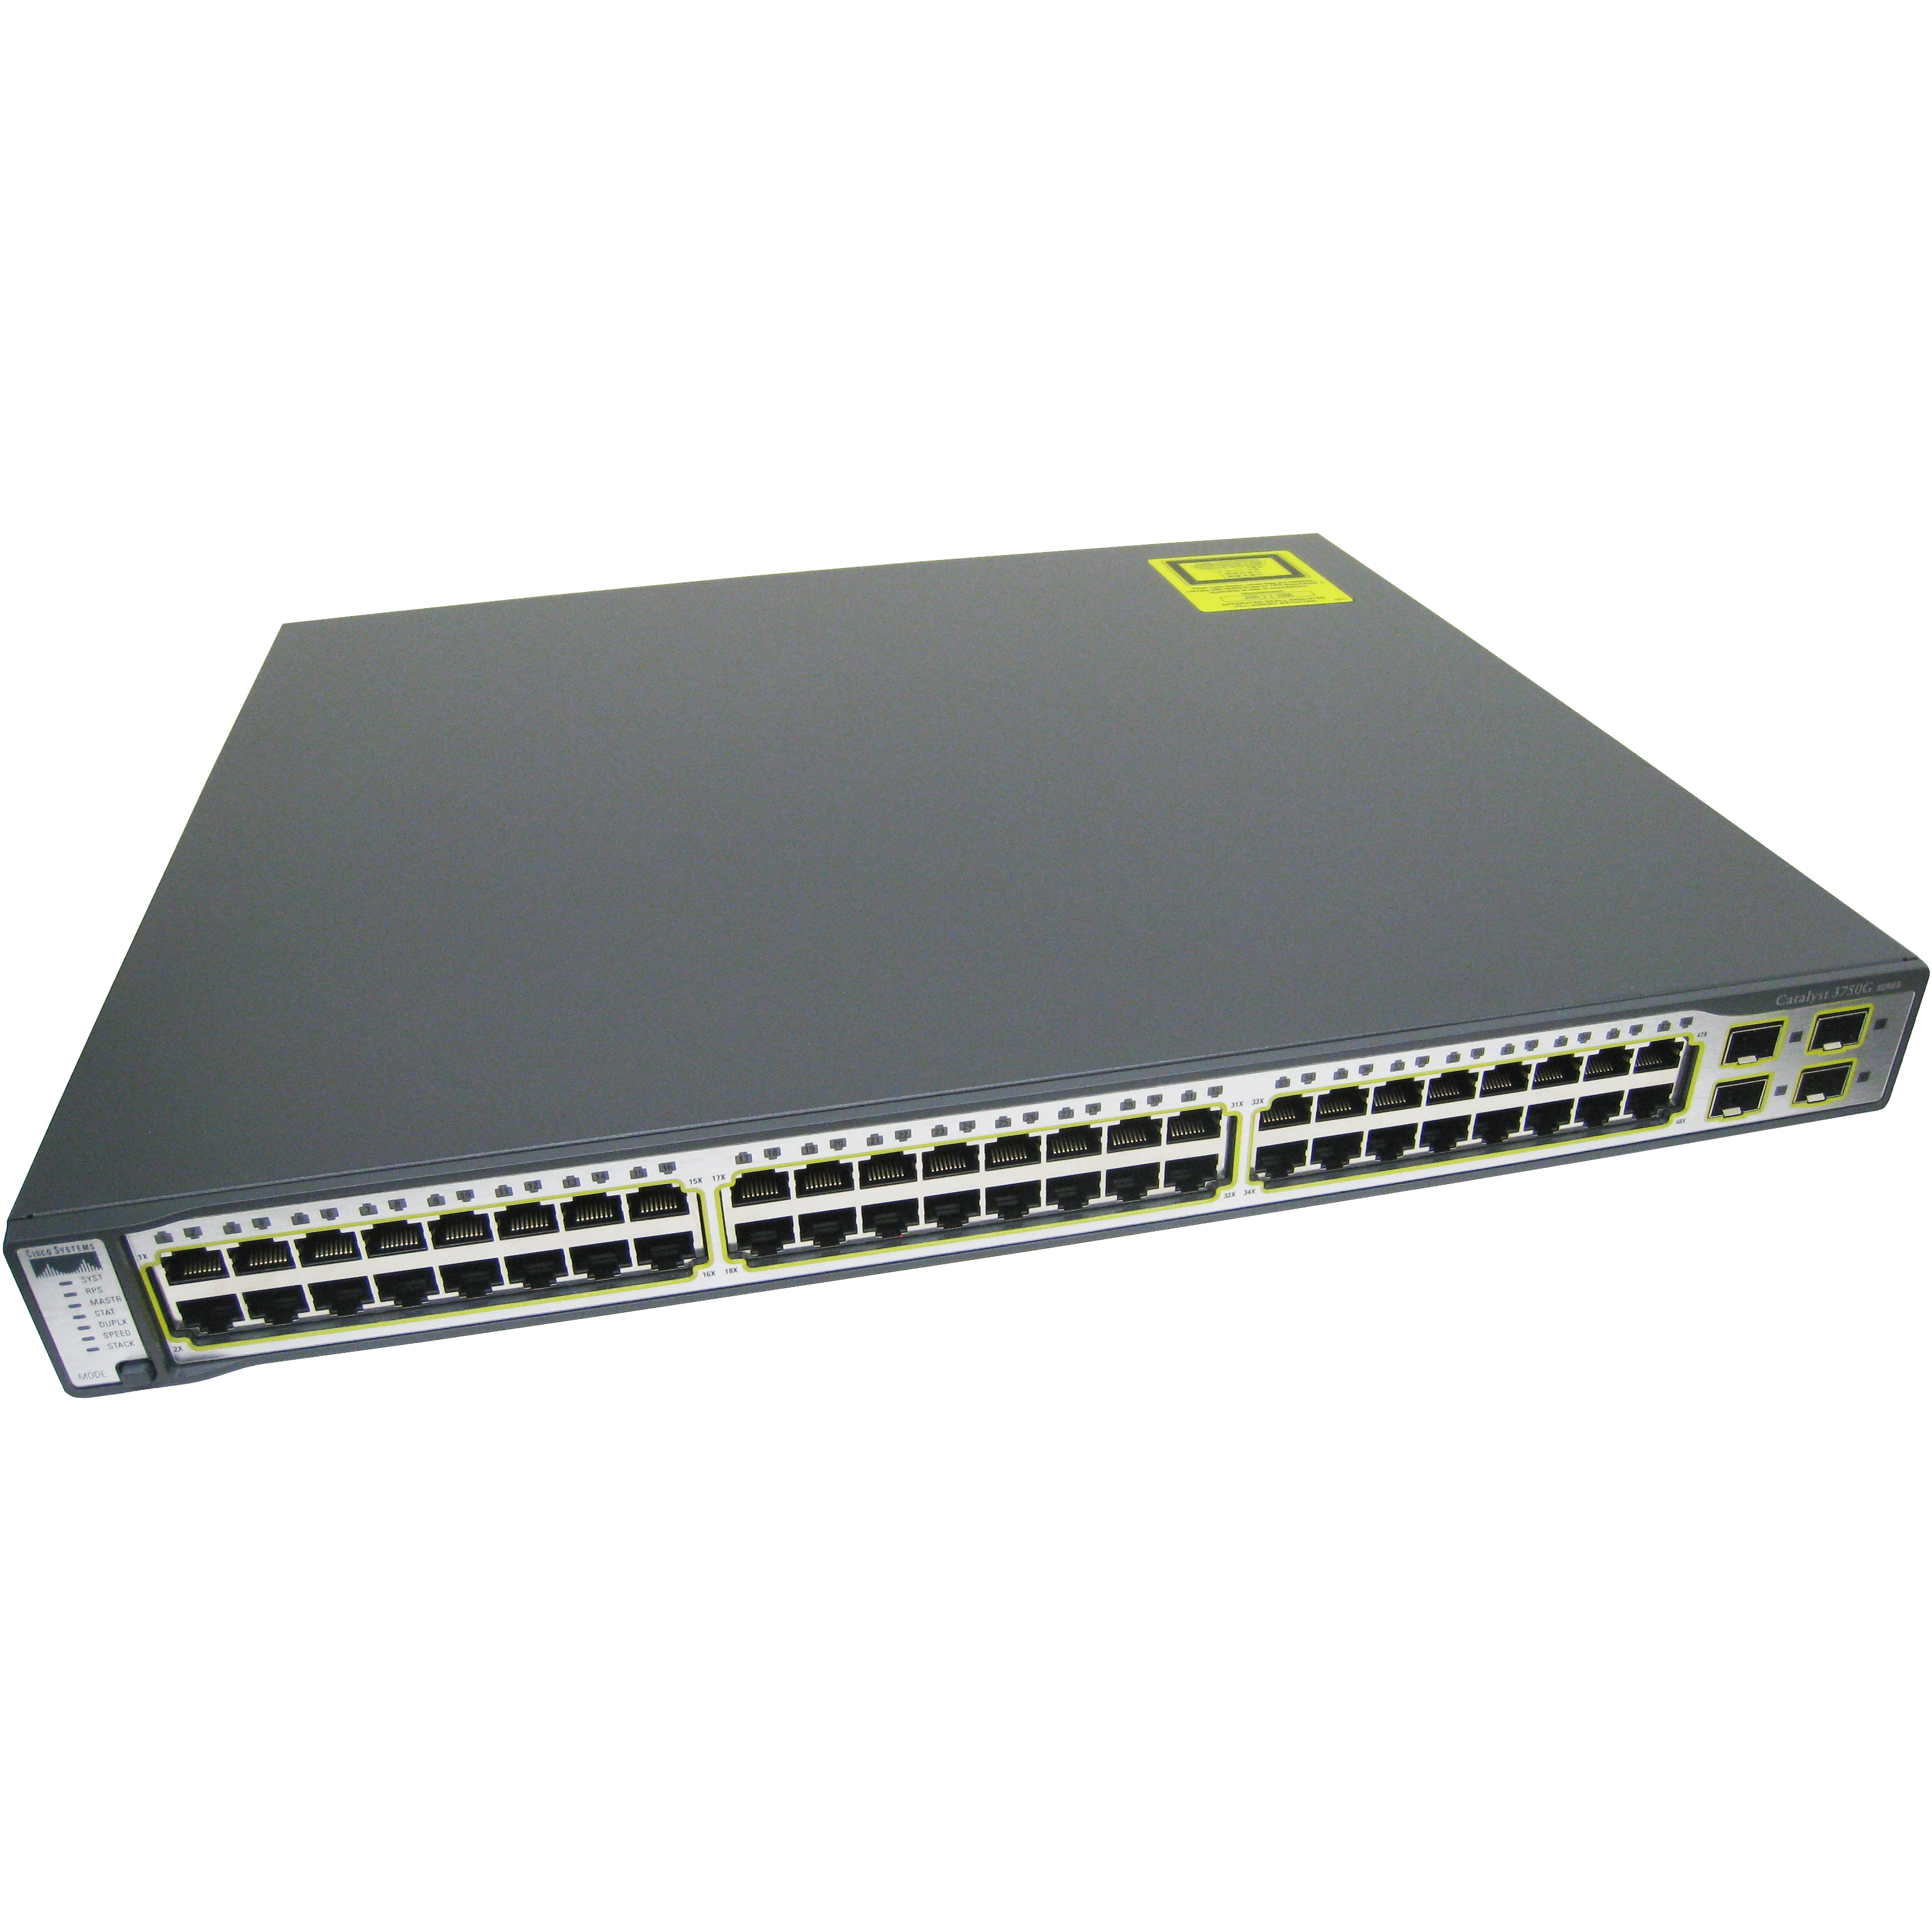 Cisco WS-C3750G-48TS-E